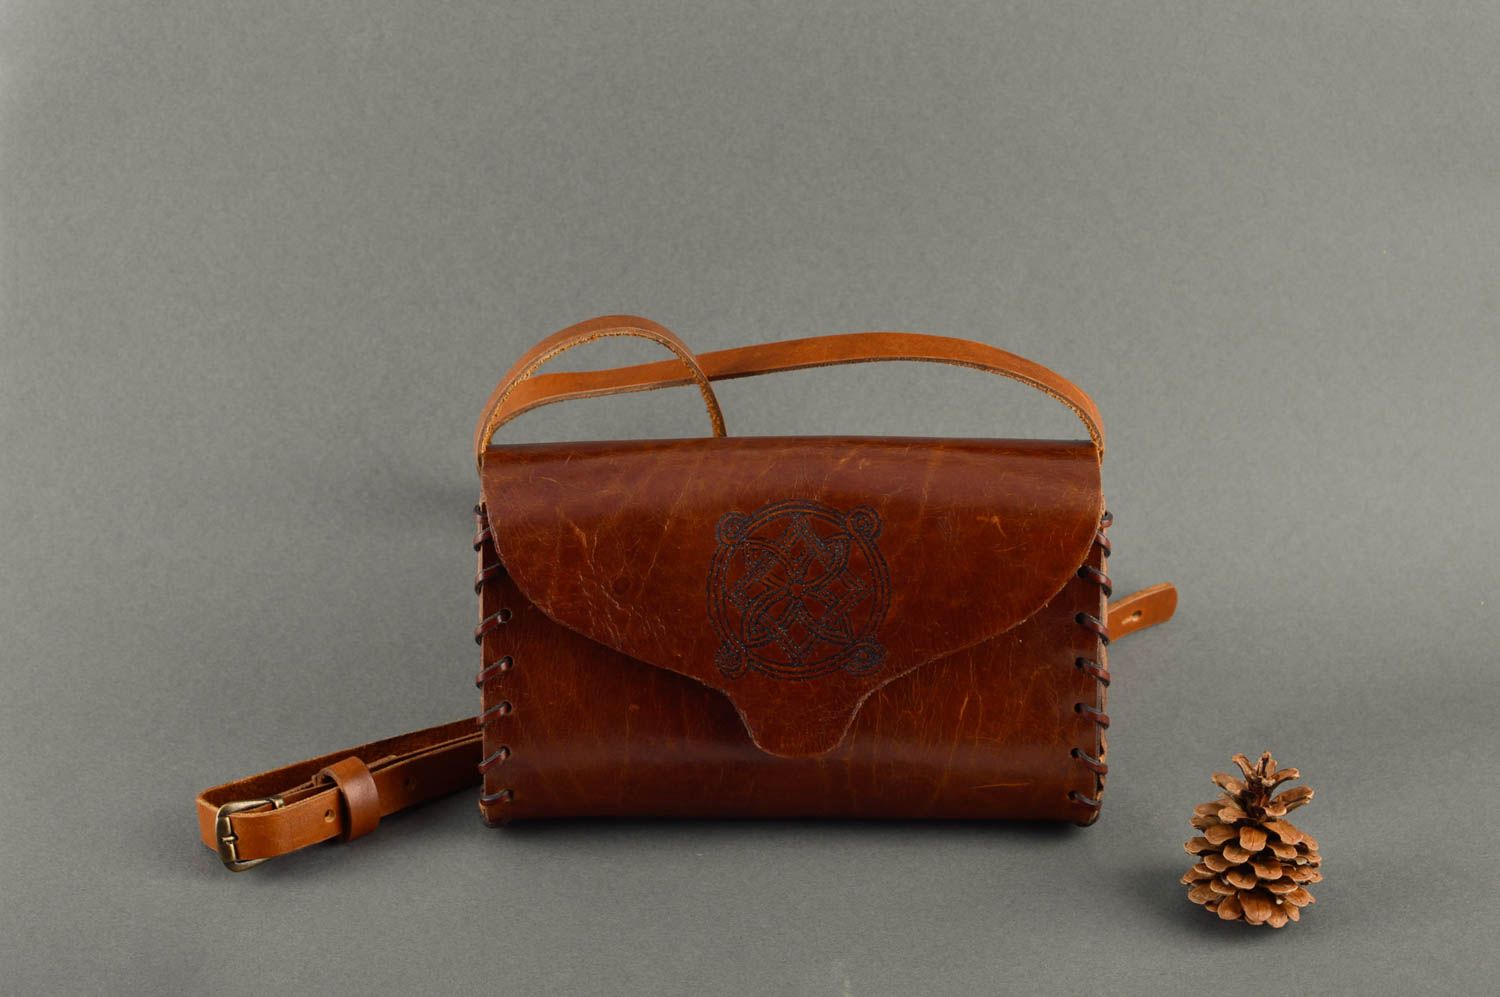 Unusual handmade leather bag leather goods shoulder bag fashion trends photo 1